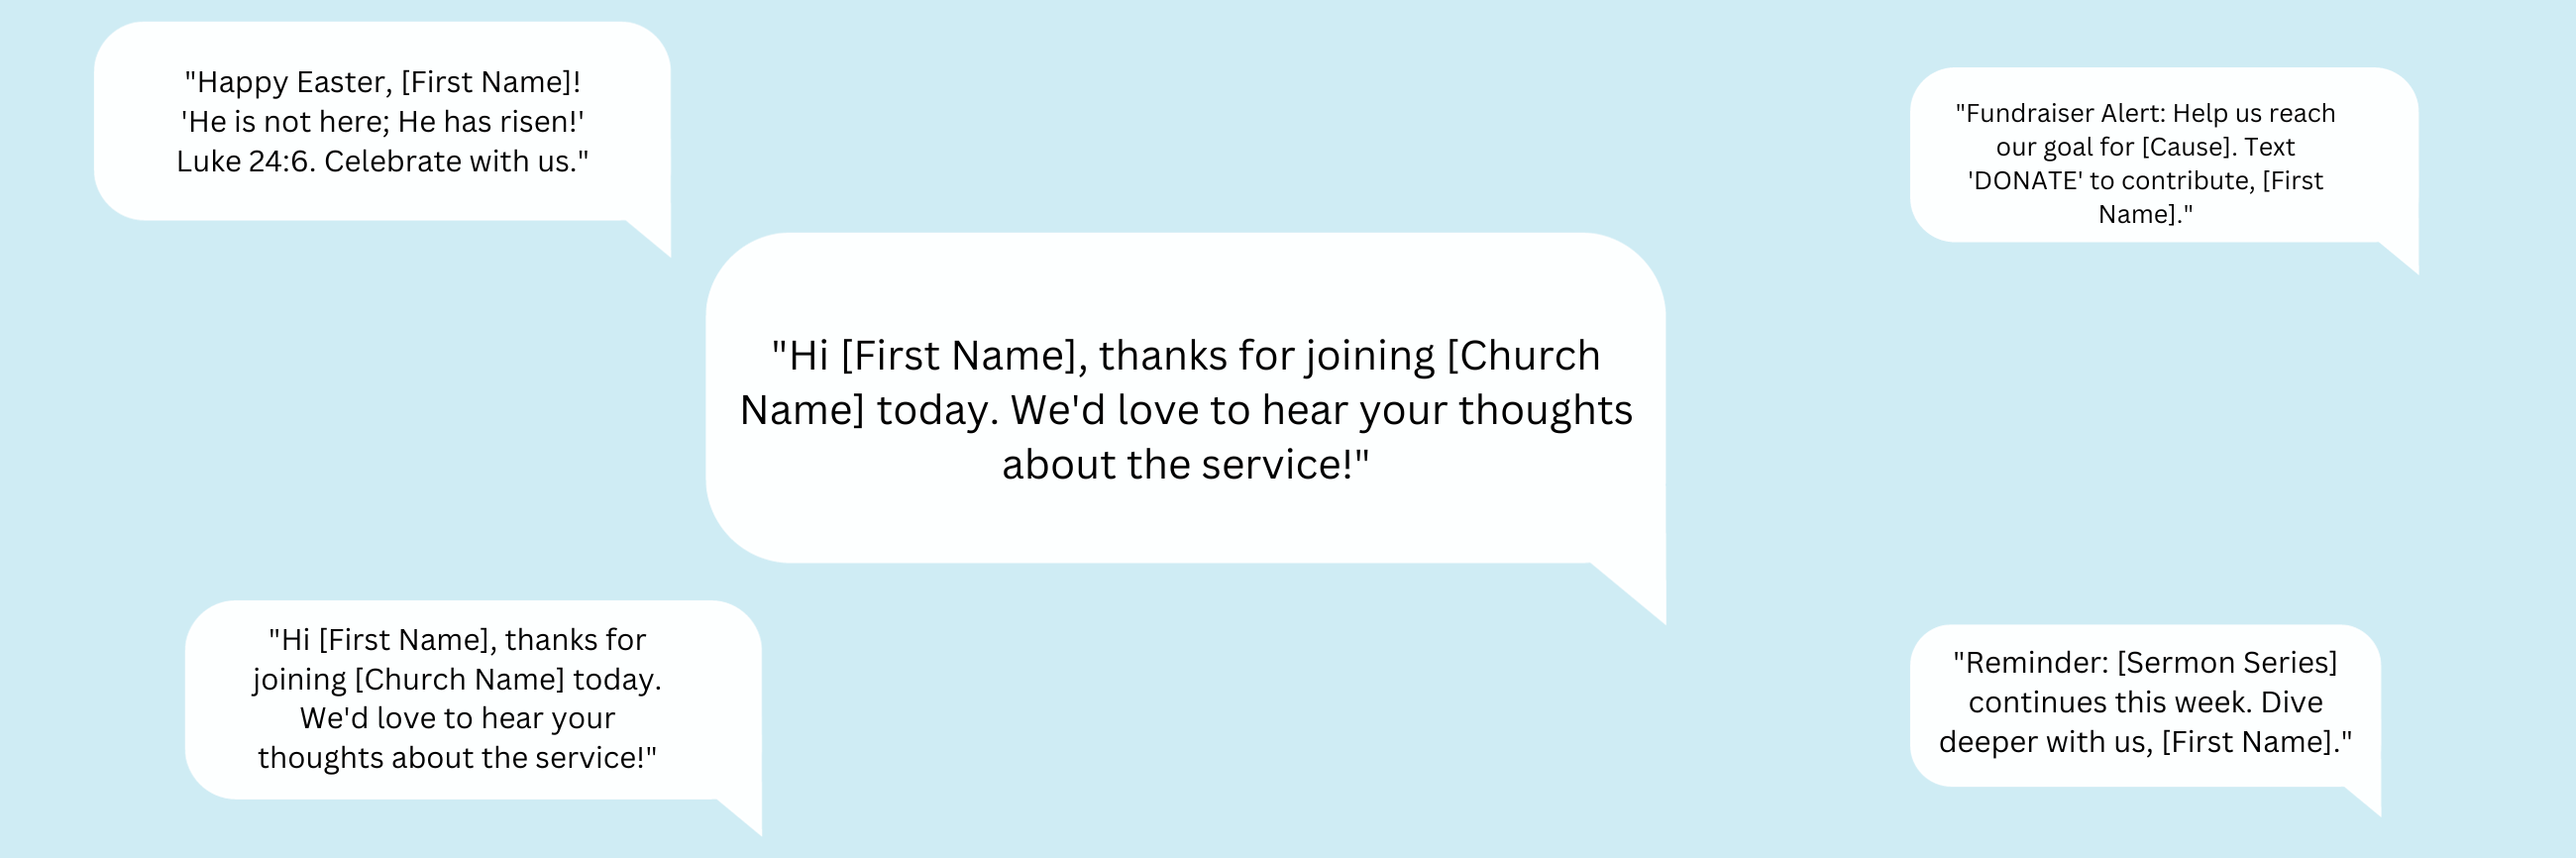 Church Text Message Templates